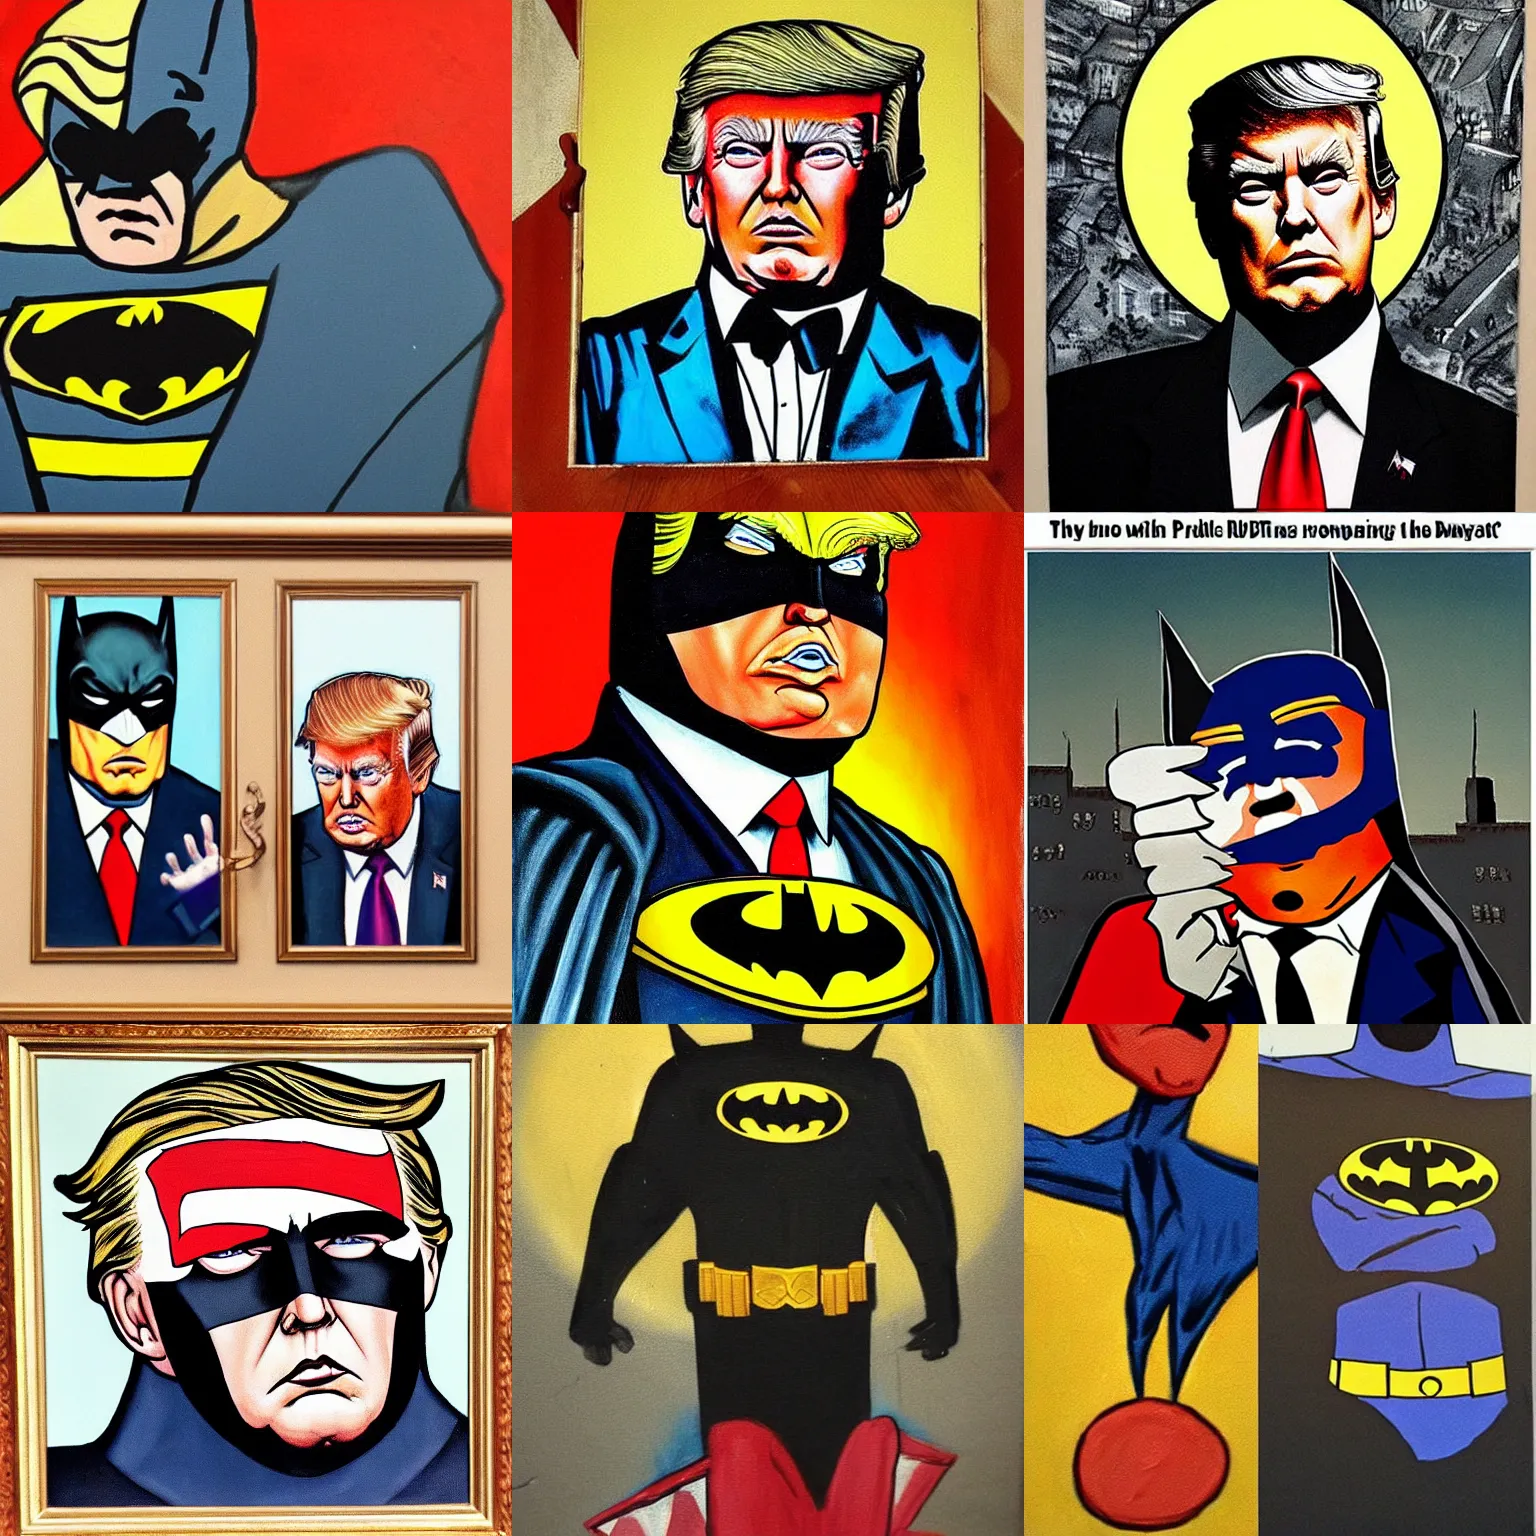 Prompt: 1 2 0 0 s painting of donald trump as batman